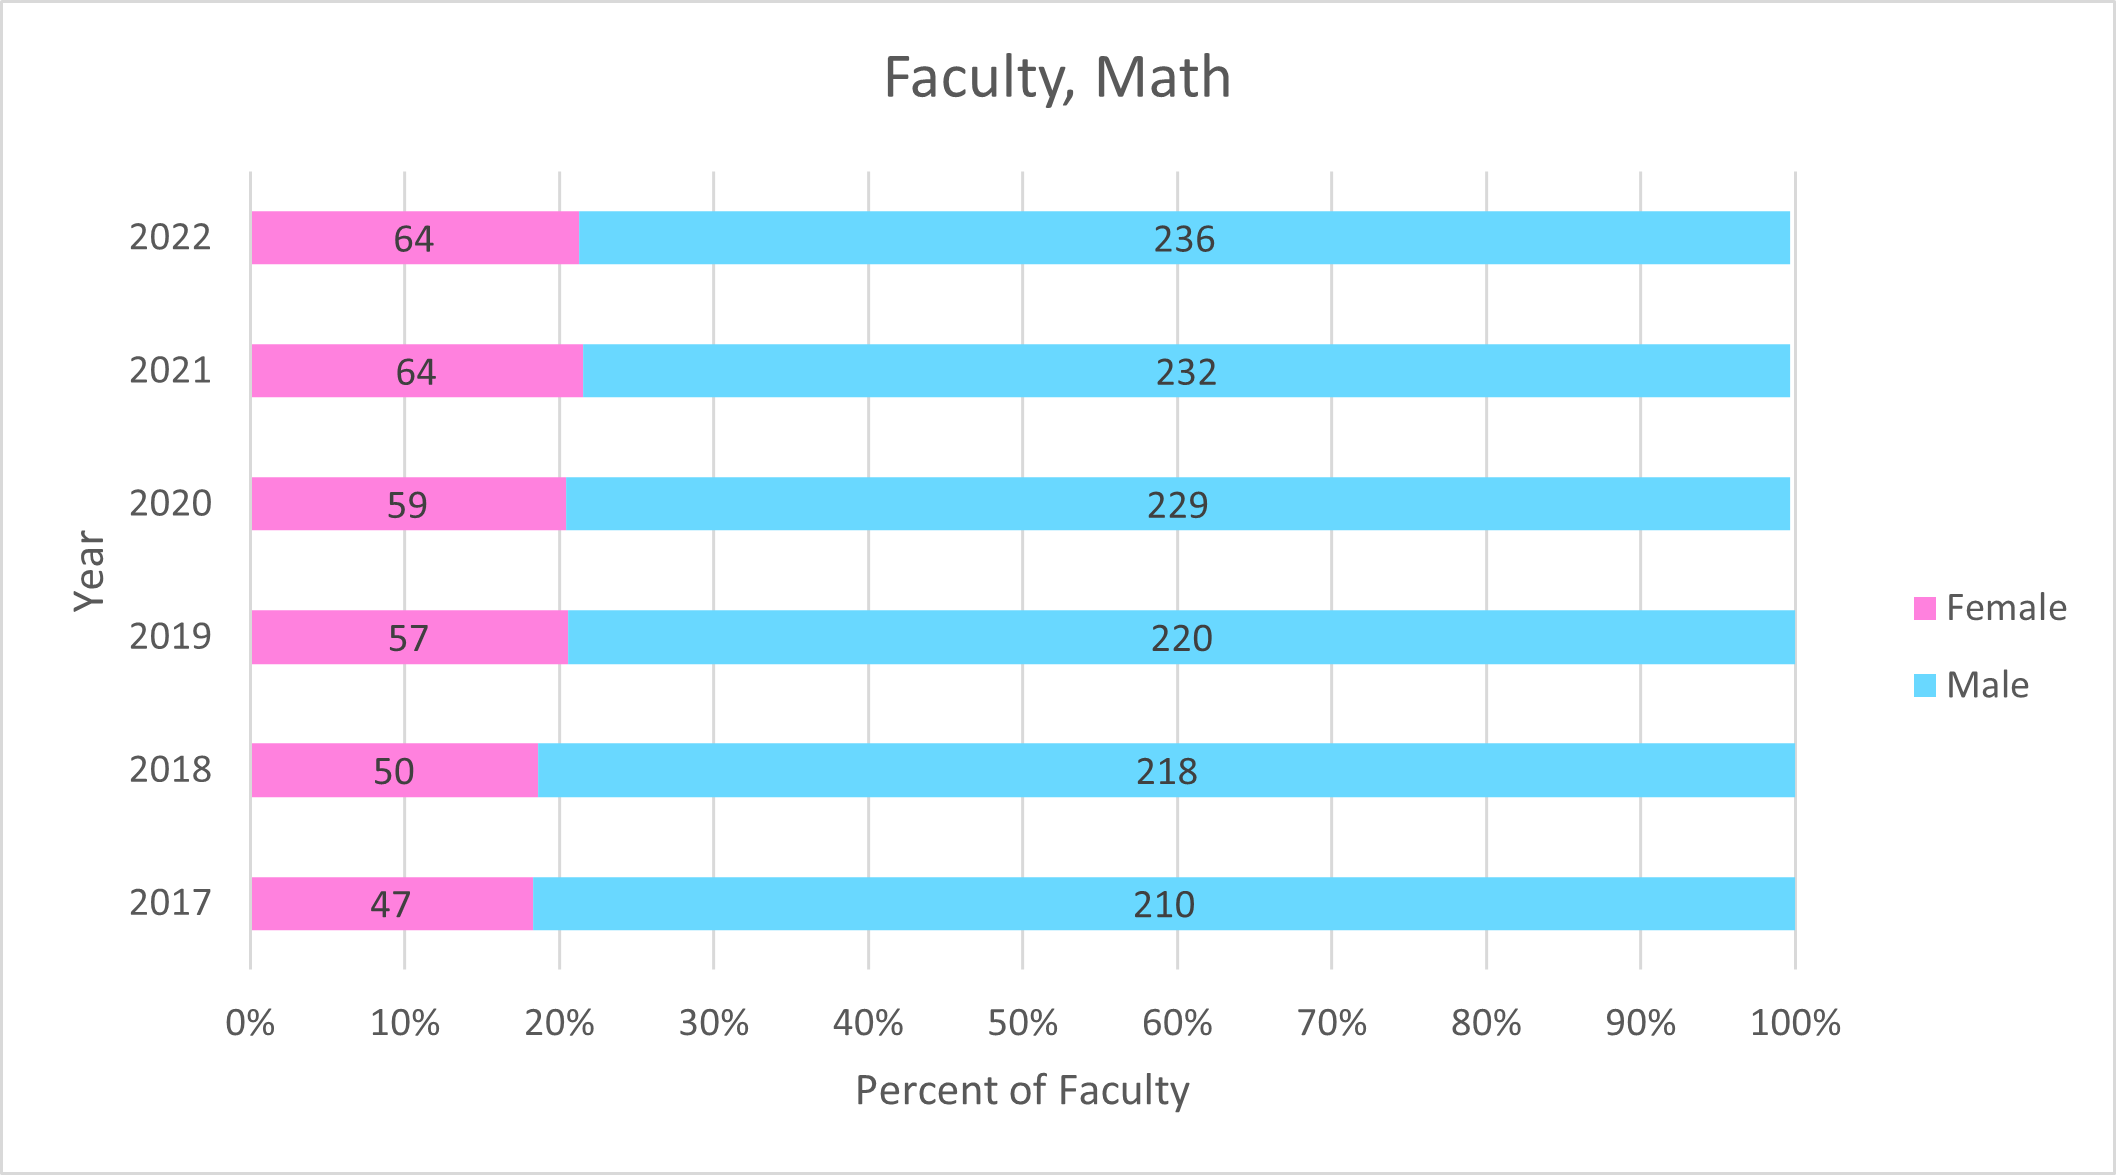 Faculty of Math gender statistics (2017-2022)